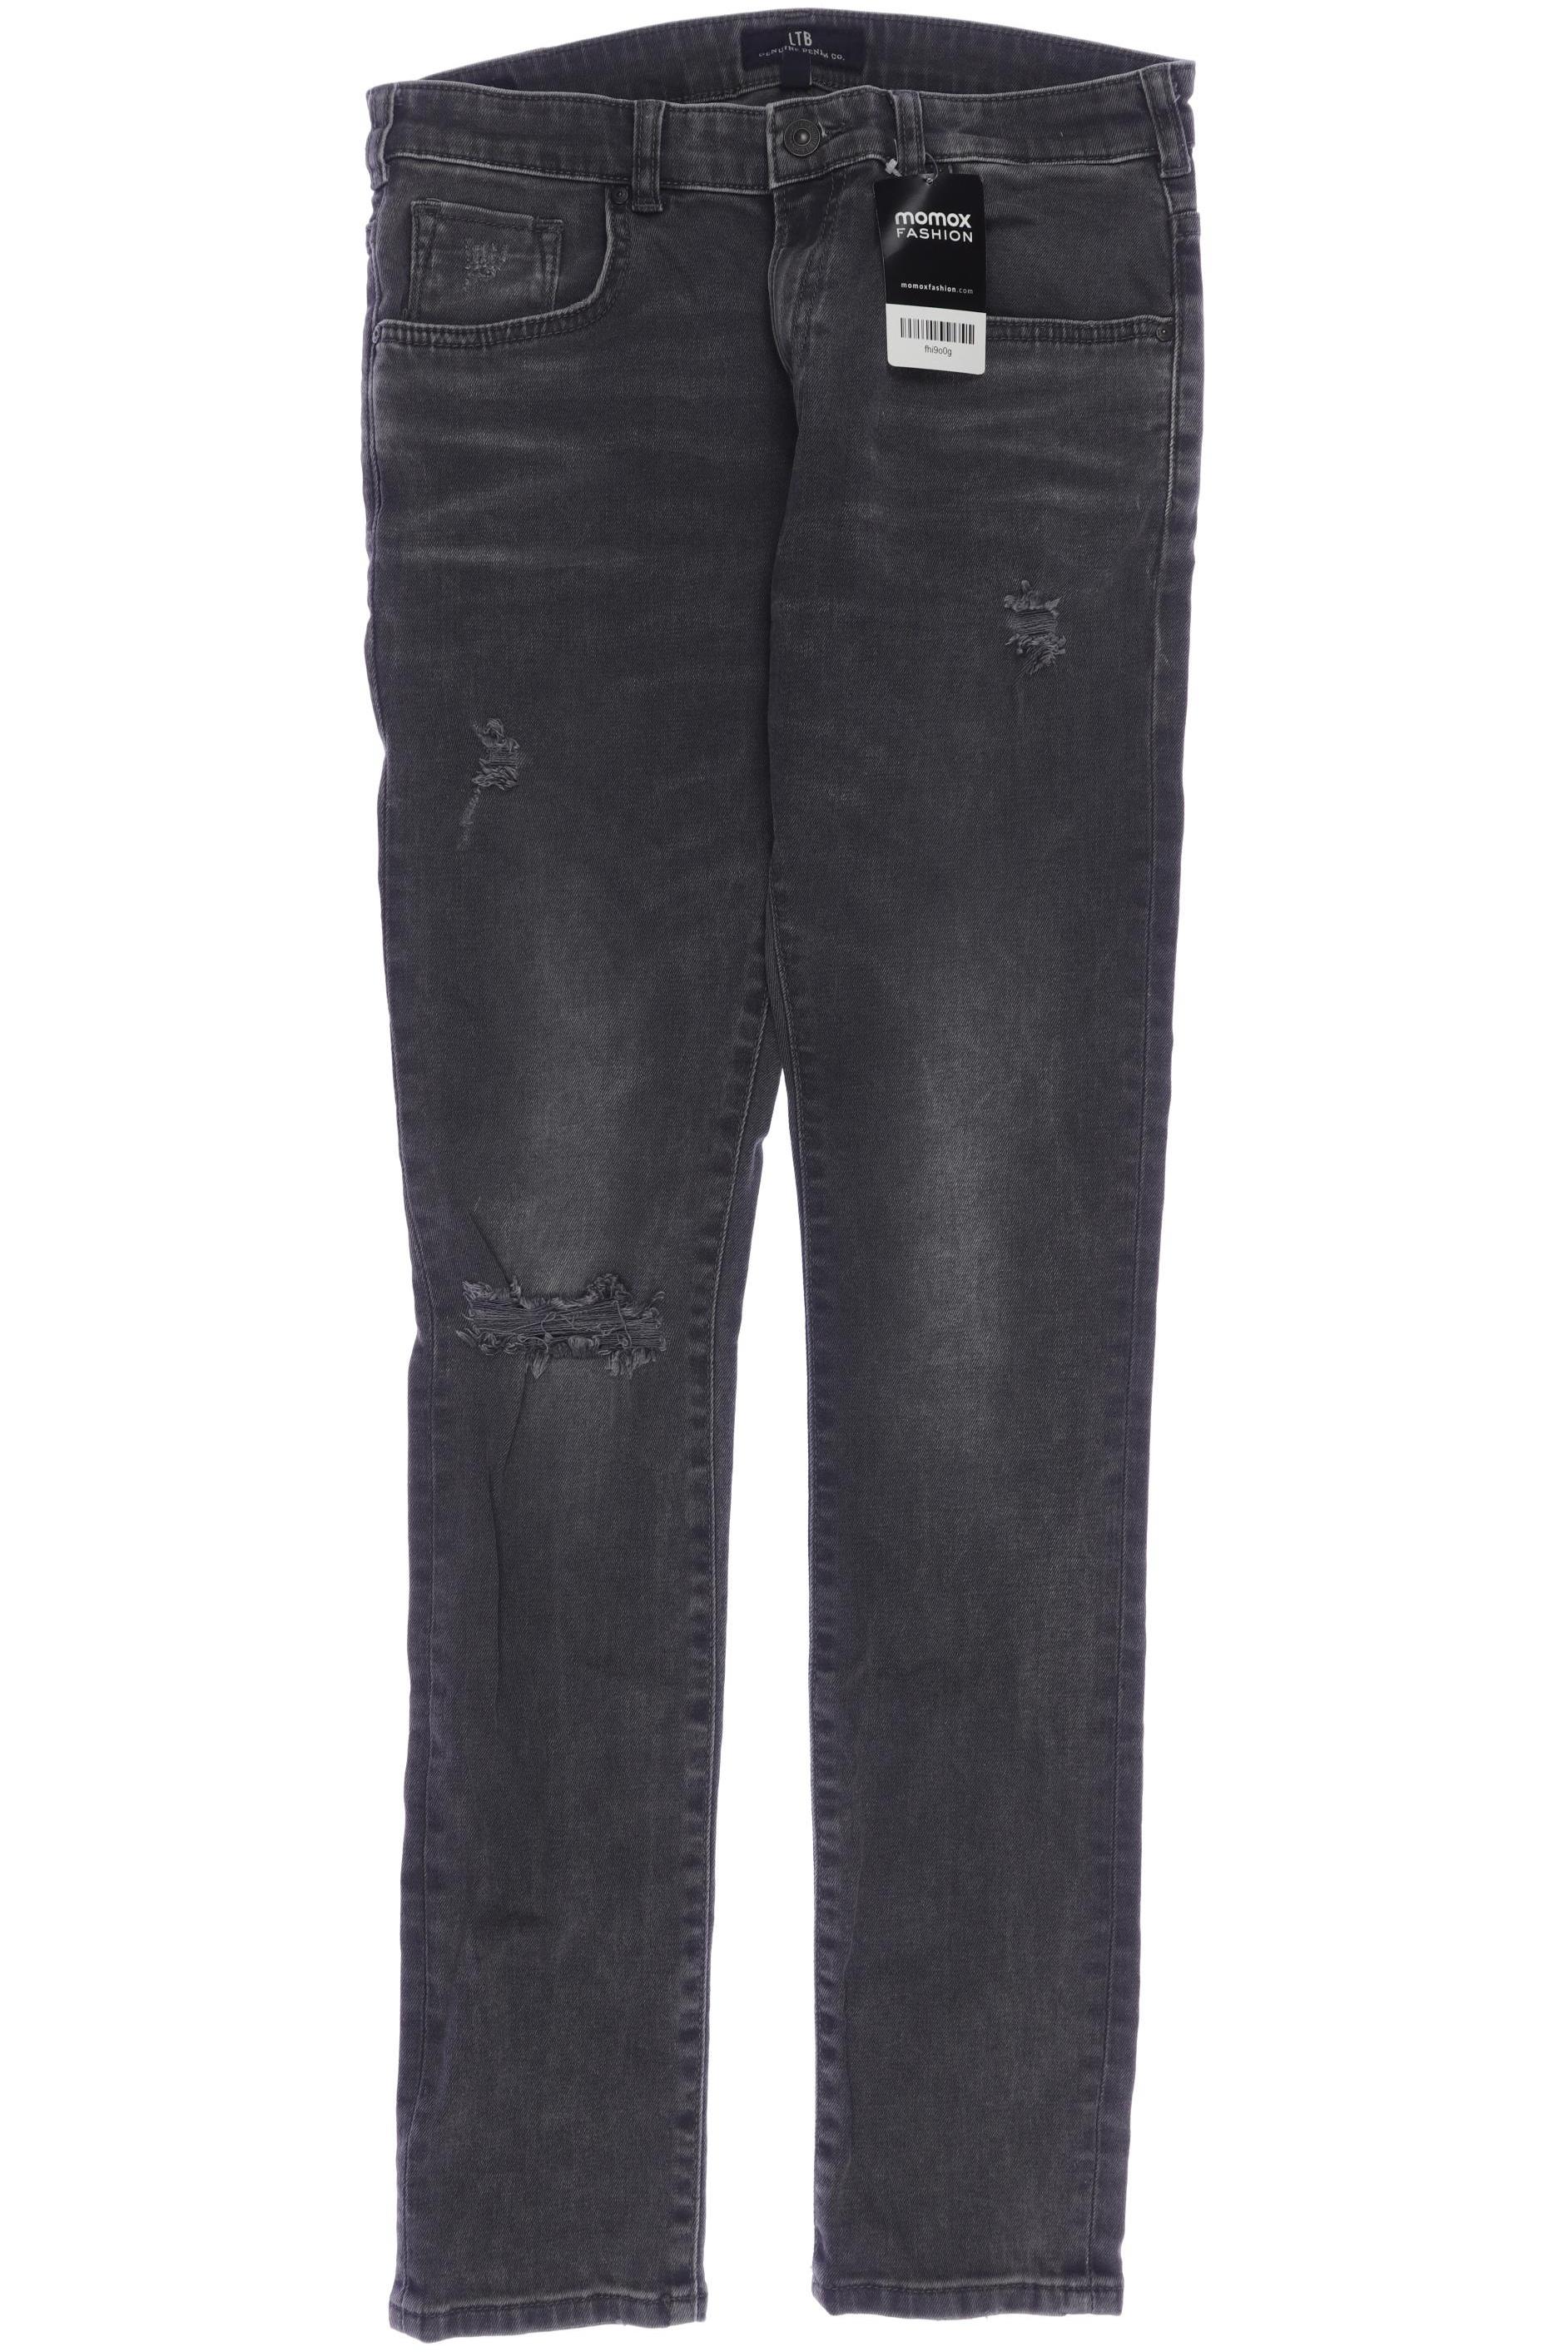 LTB Damen Jeans, grau, Gr. 164 von LTB